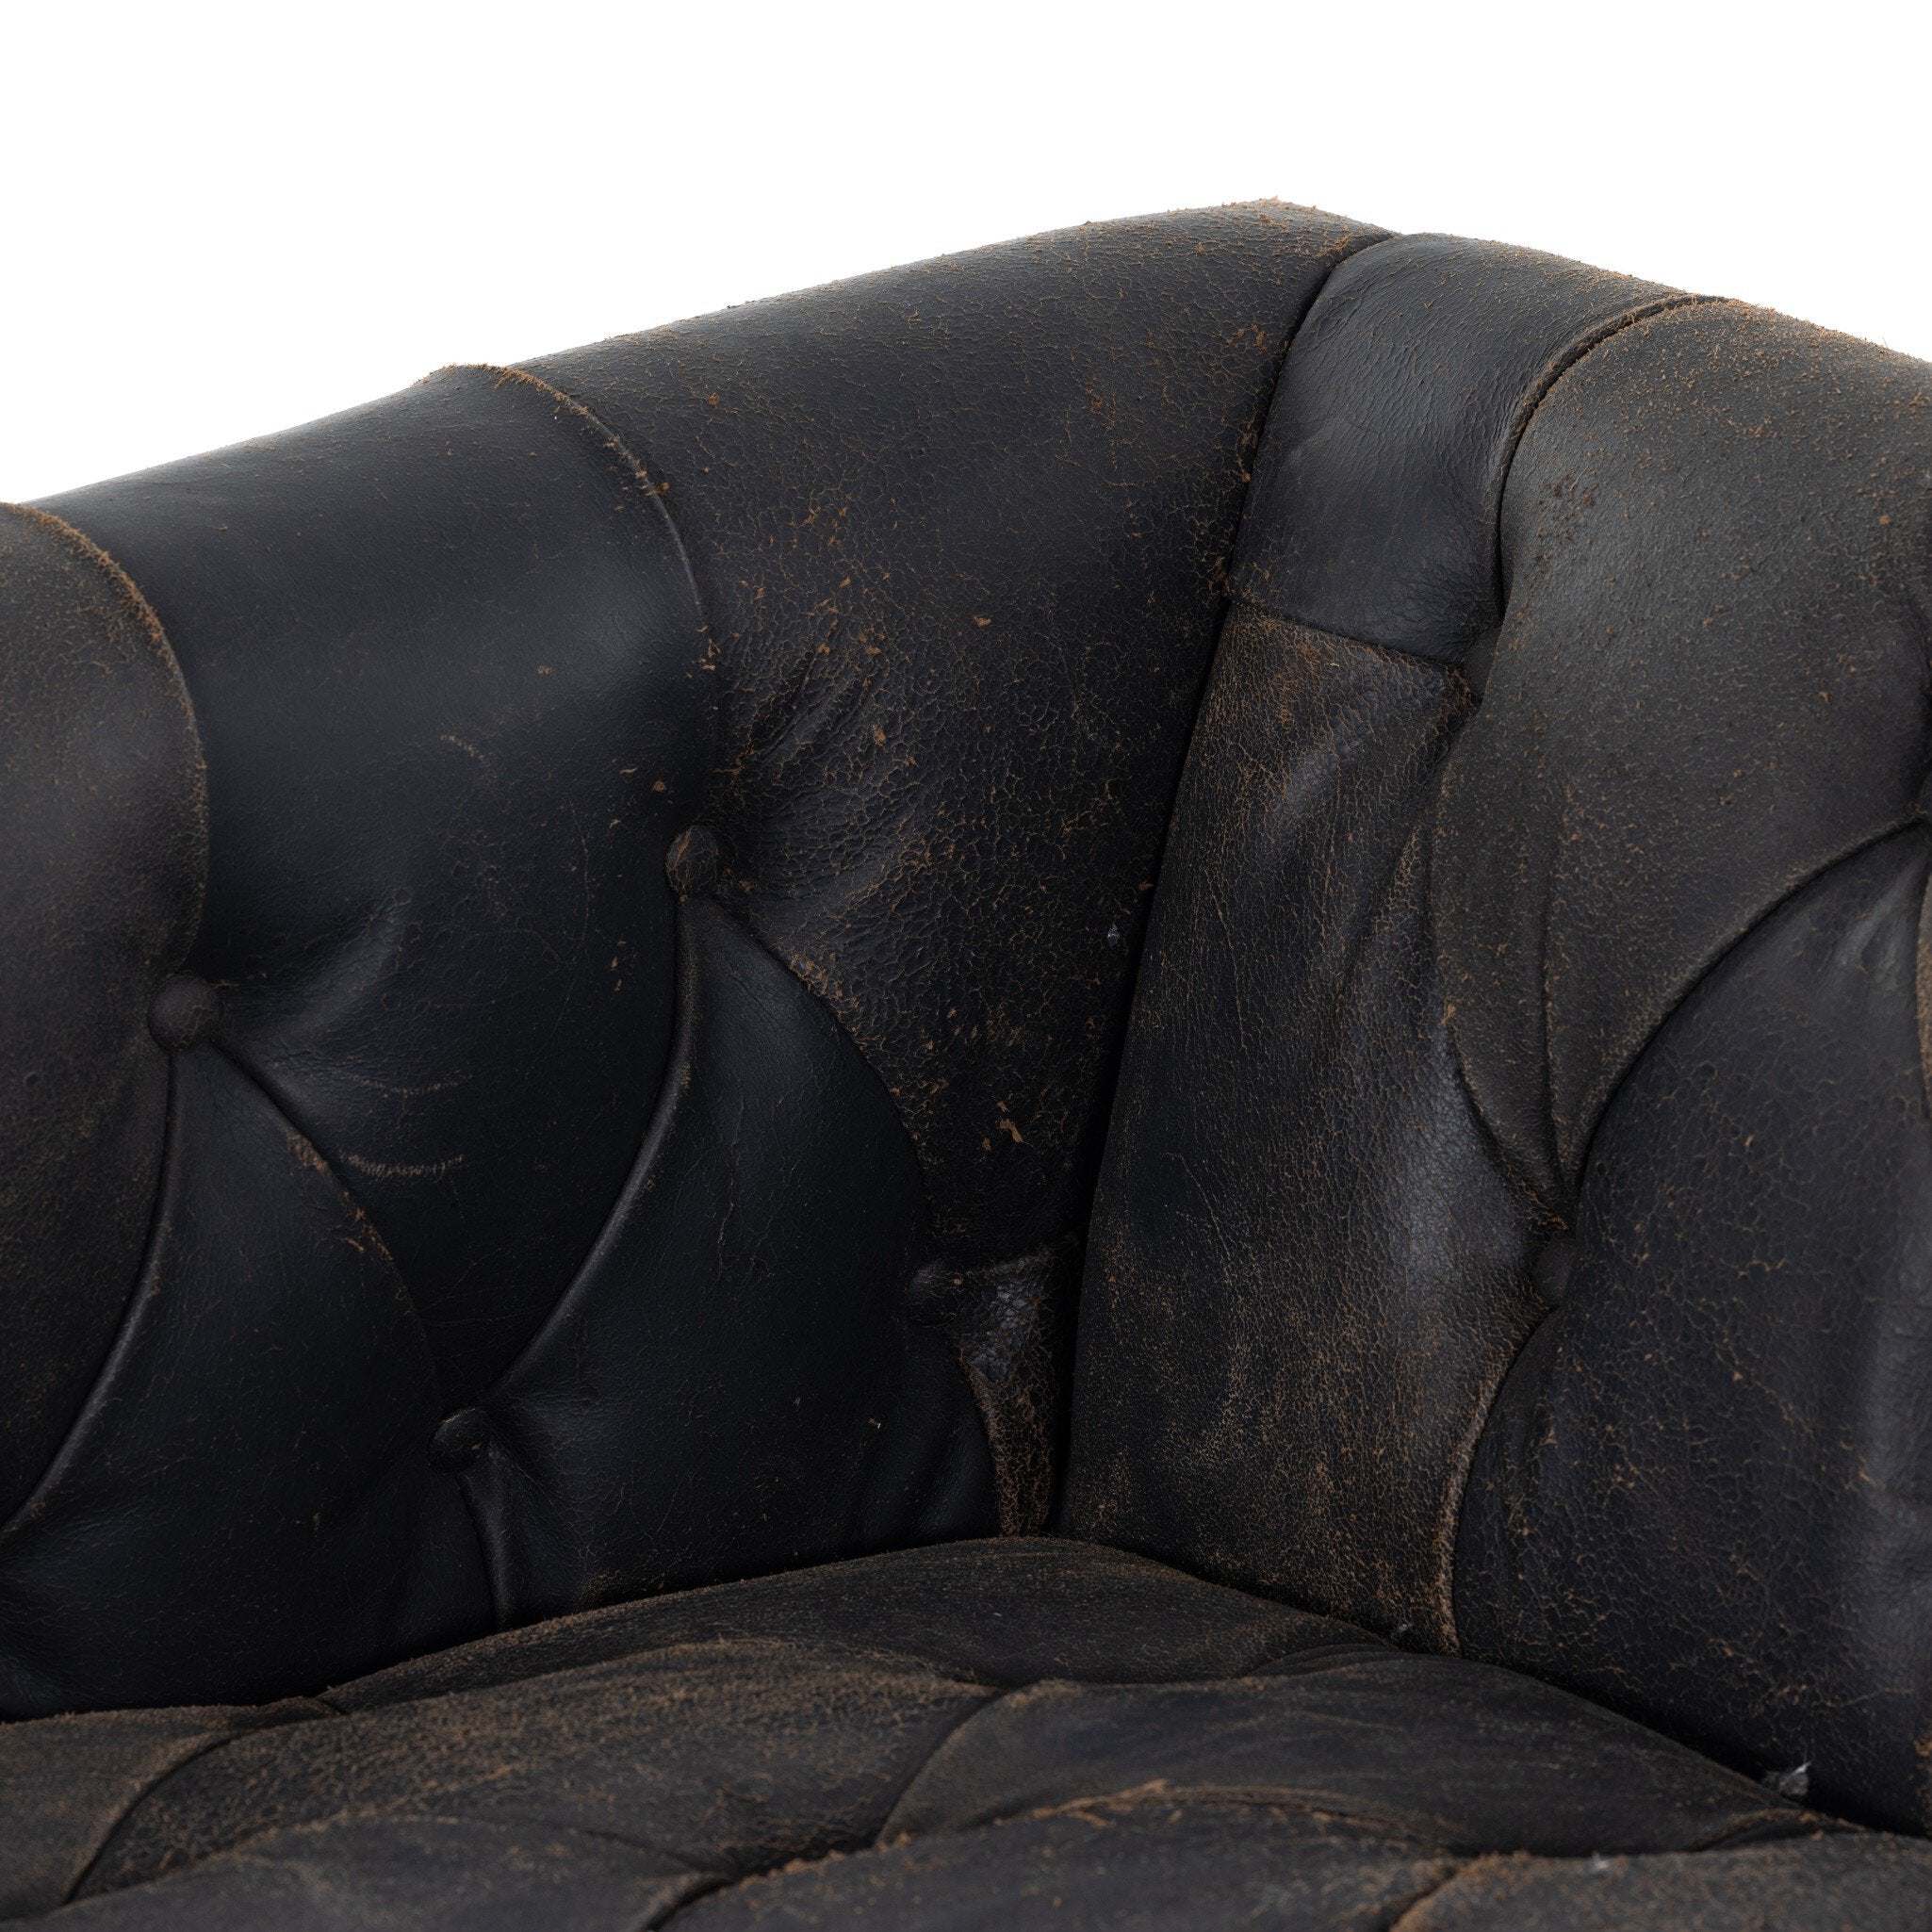 Maxx Sofa - Destroyed Black